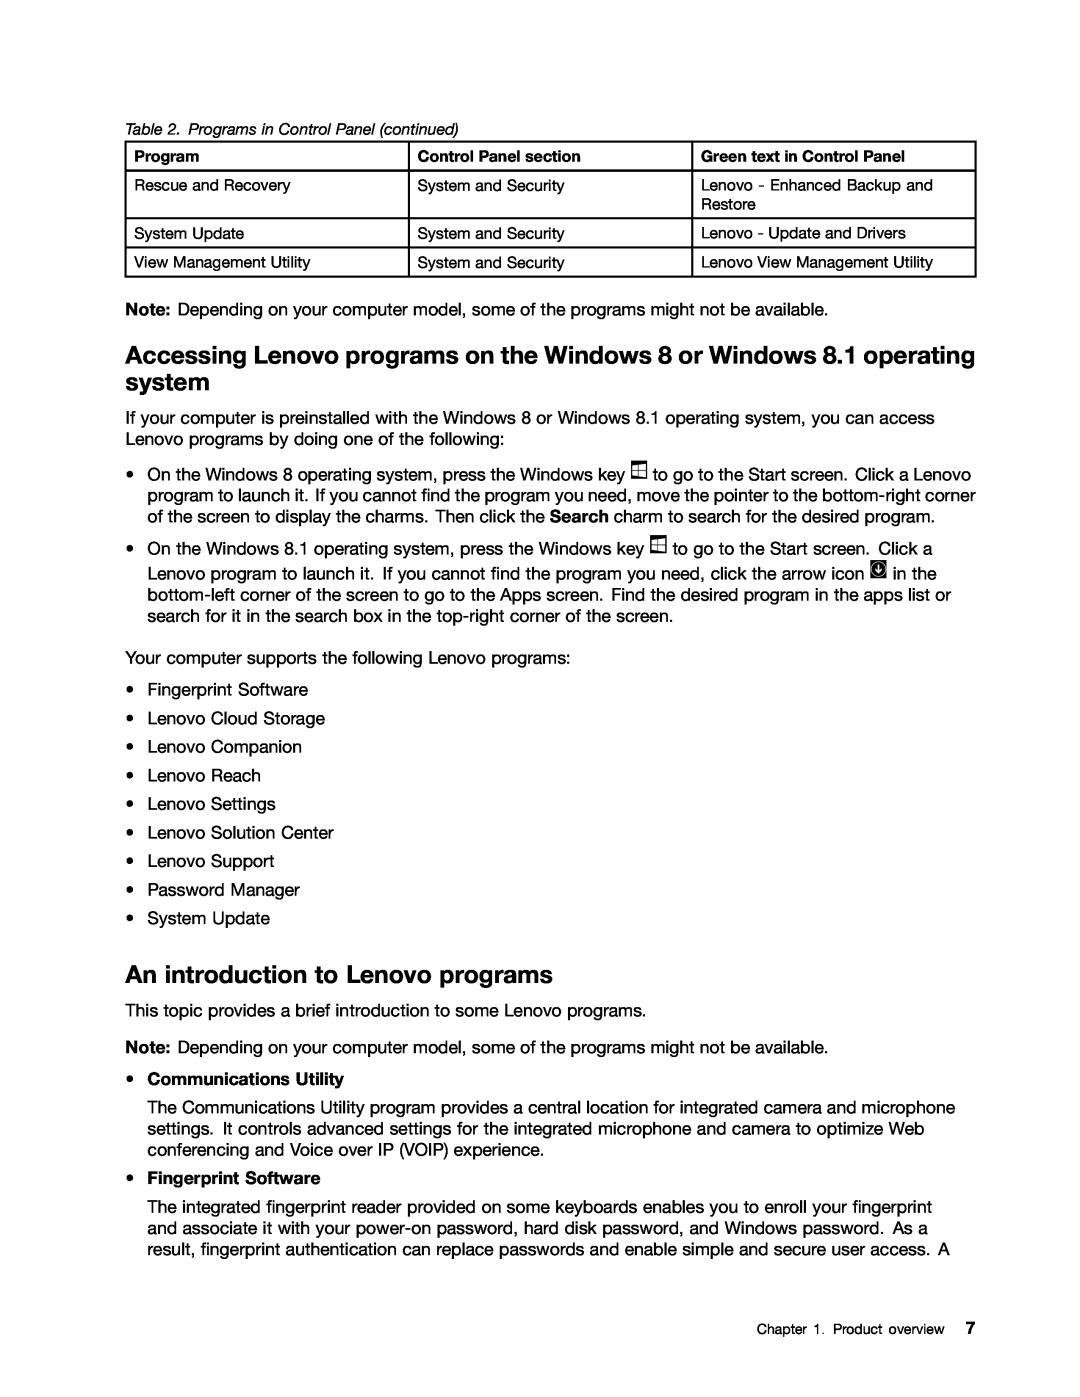 Lenovo M73 manual An introduction to Lenovo programs, Communications Utility, Fingerprint Software 